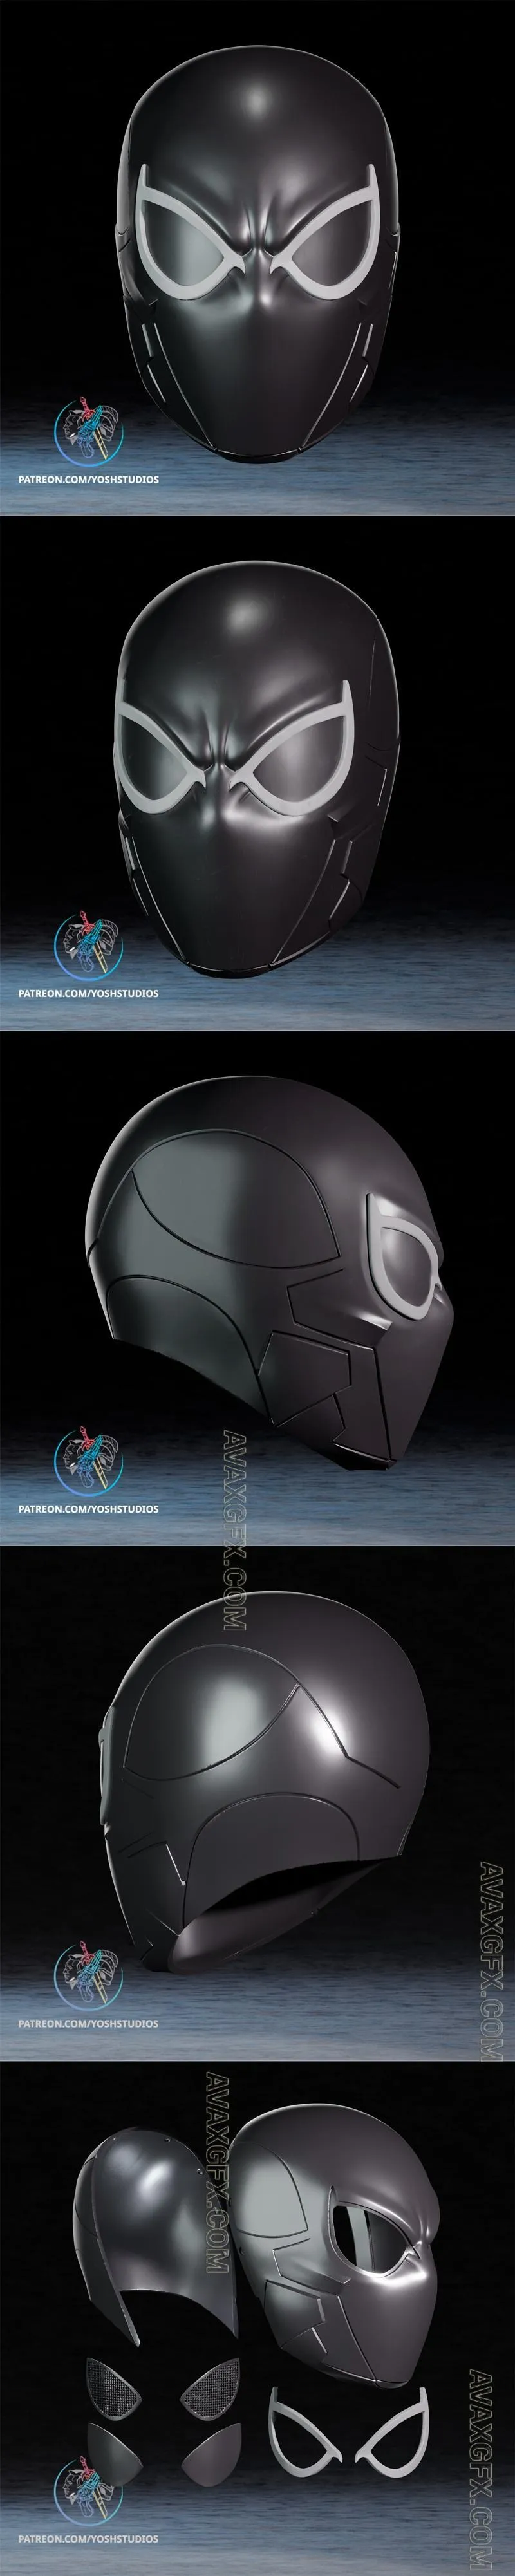 Agent Venom Spiderman 2 - STL 3D Model